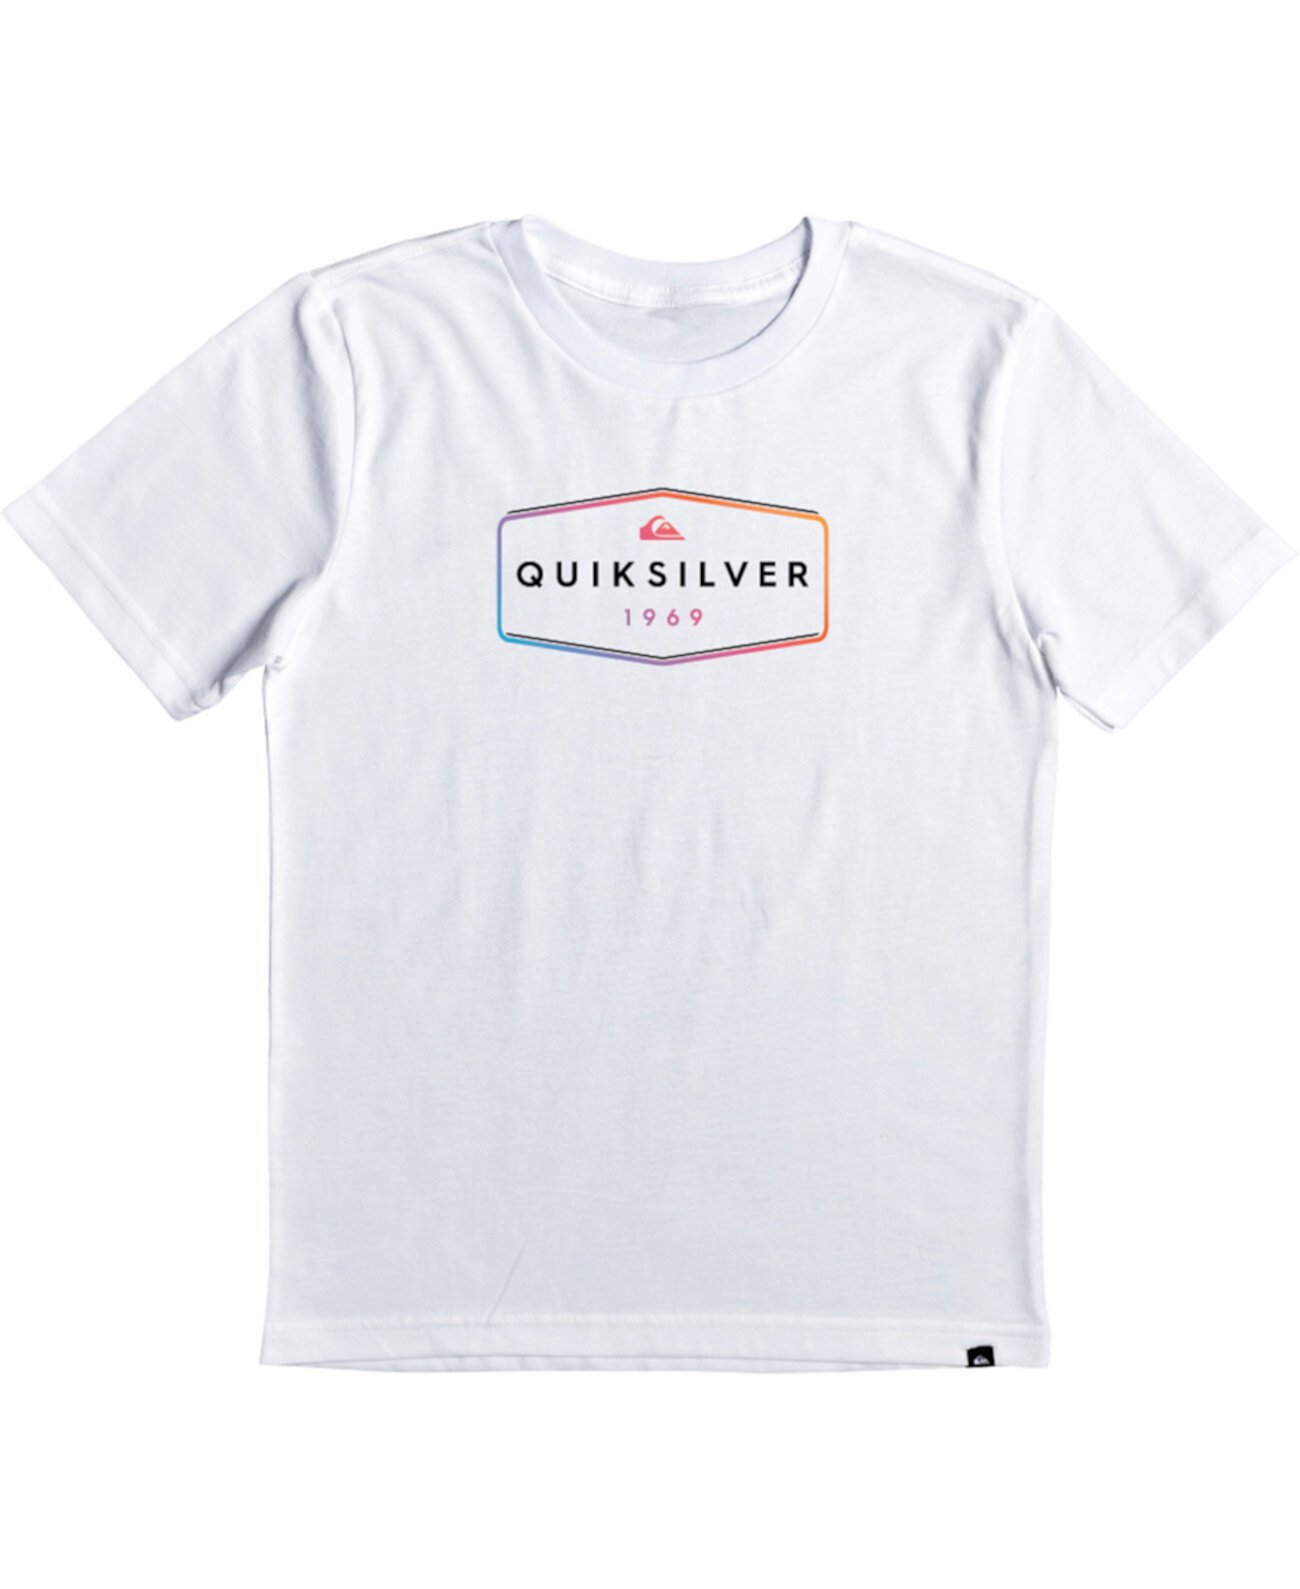 Little Boys Stear Clear T-shirt Quiksilver